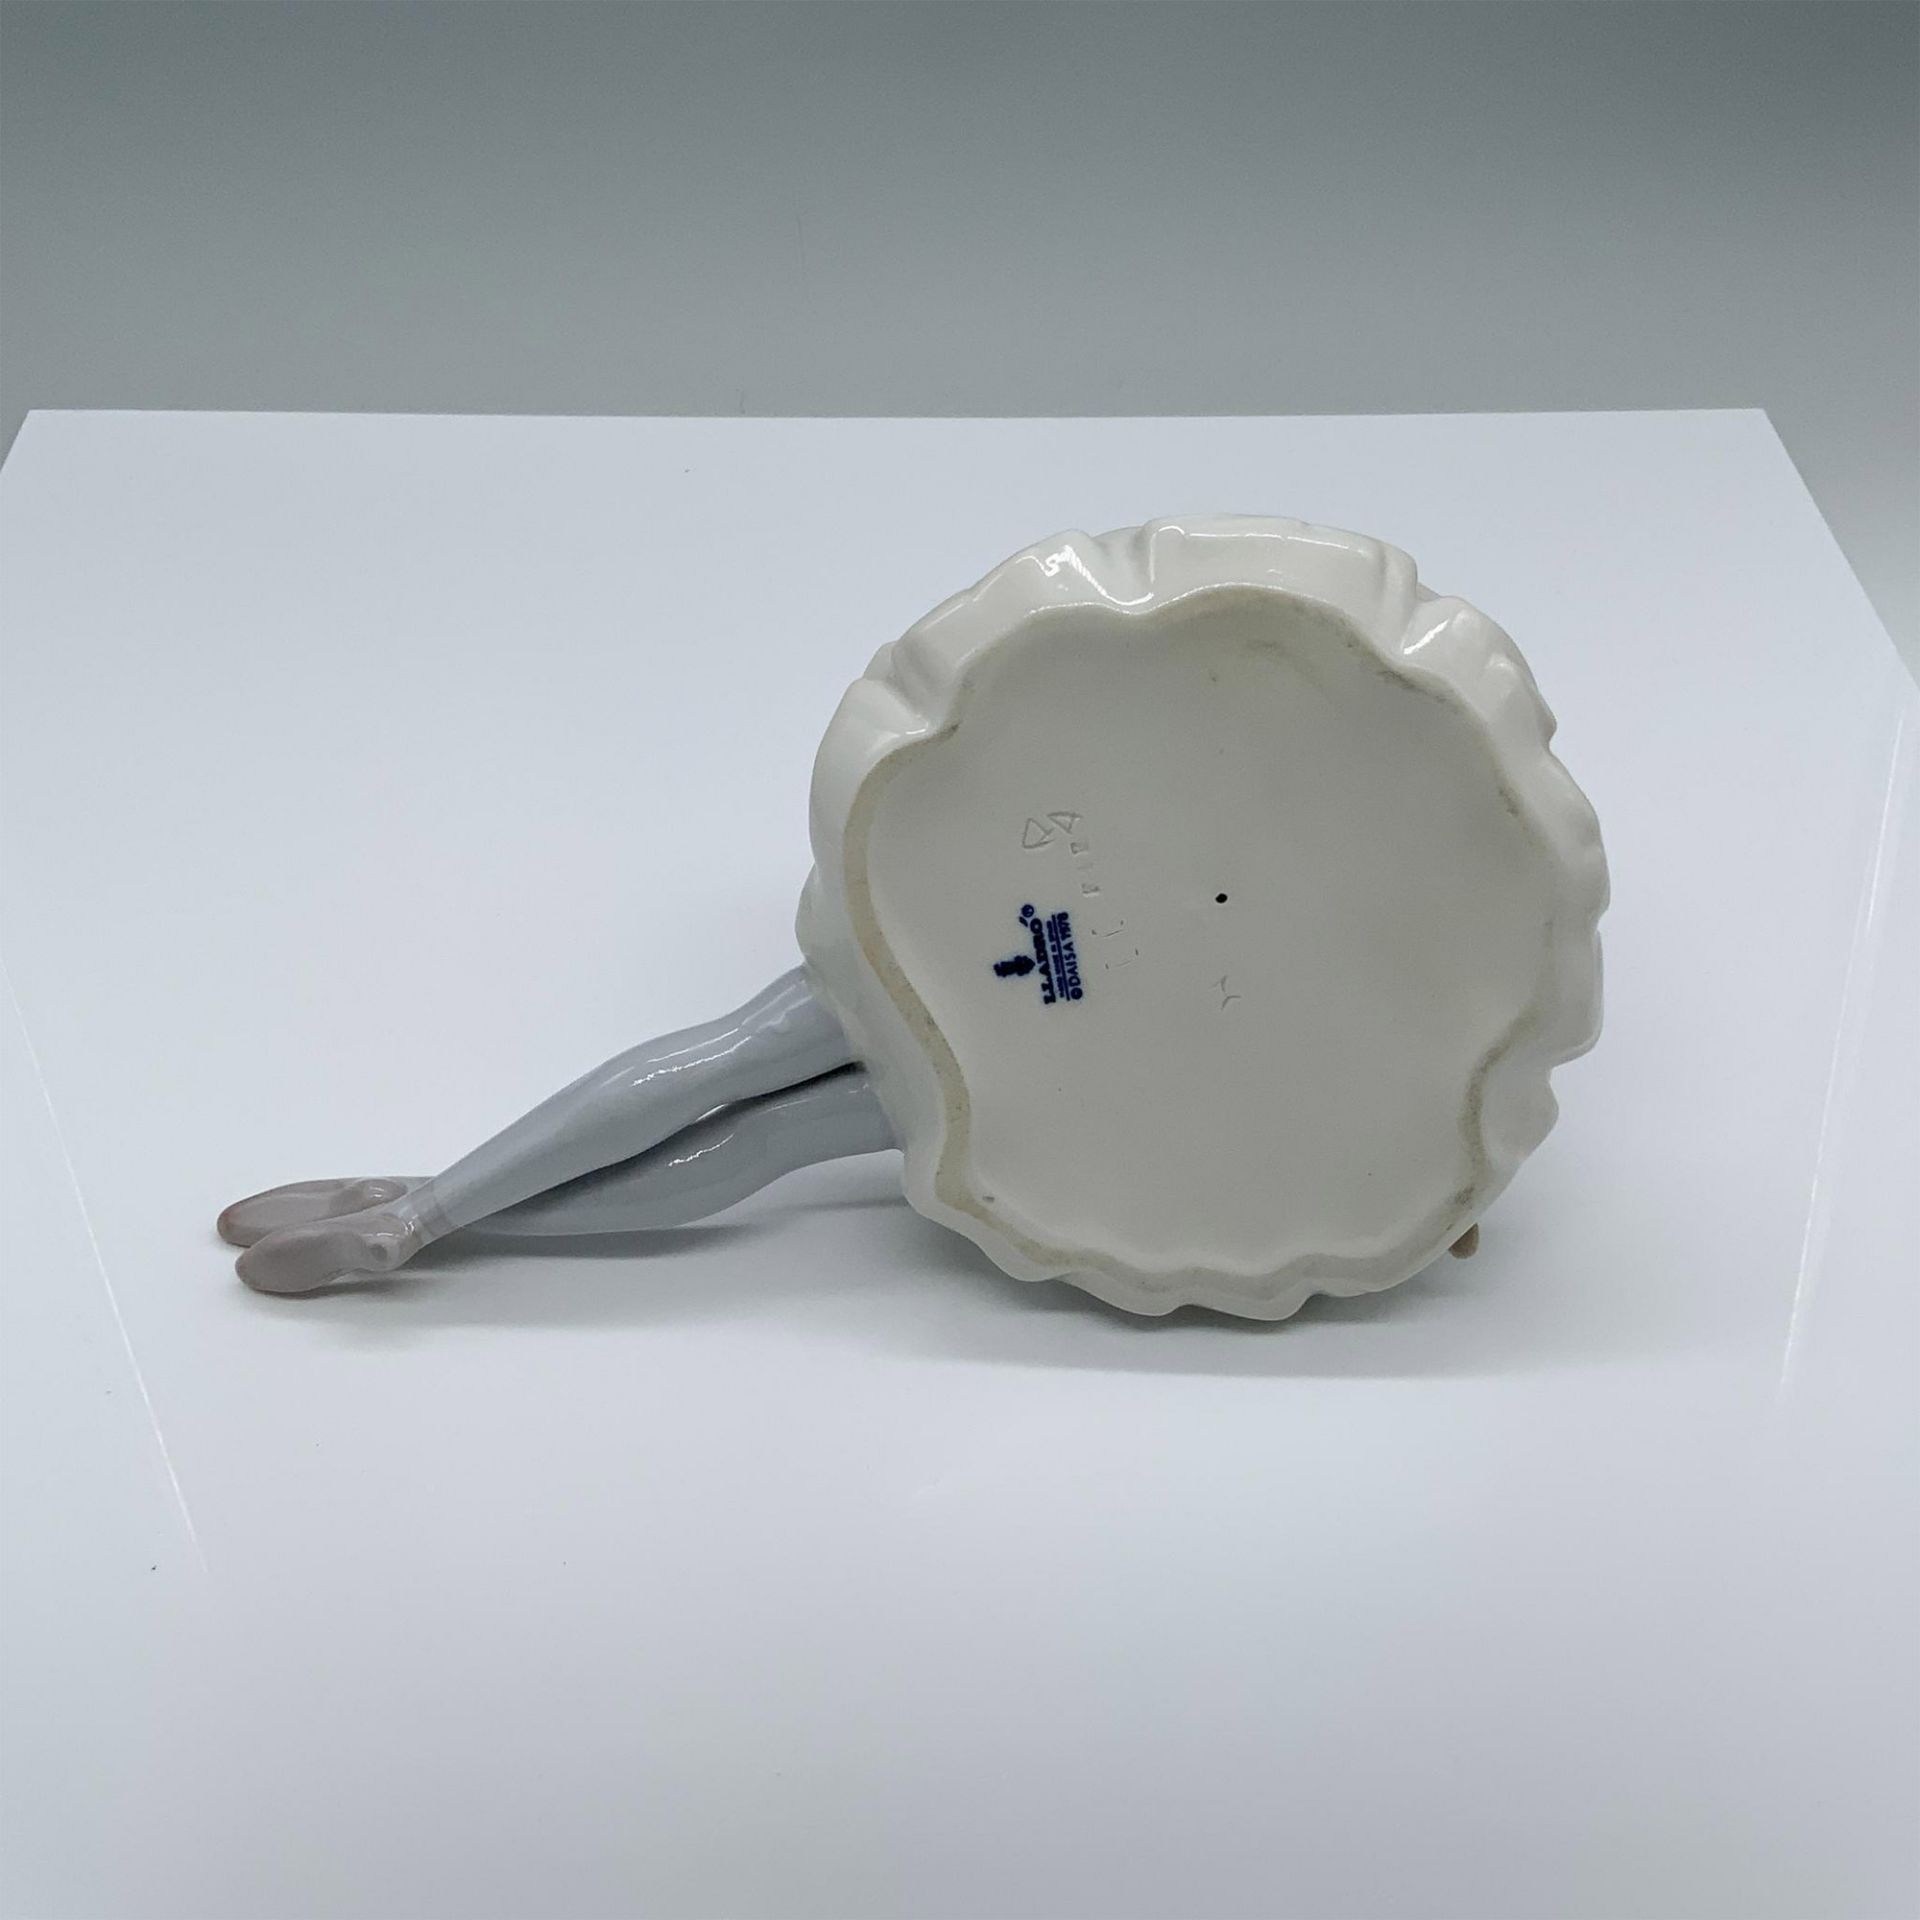 Phyllis 1001356 - Lladro Porcelain Figurine - Image 4 of 4